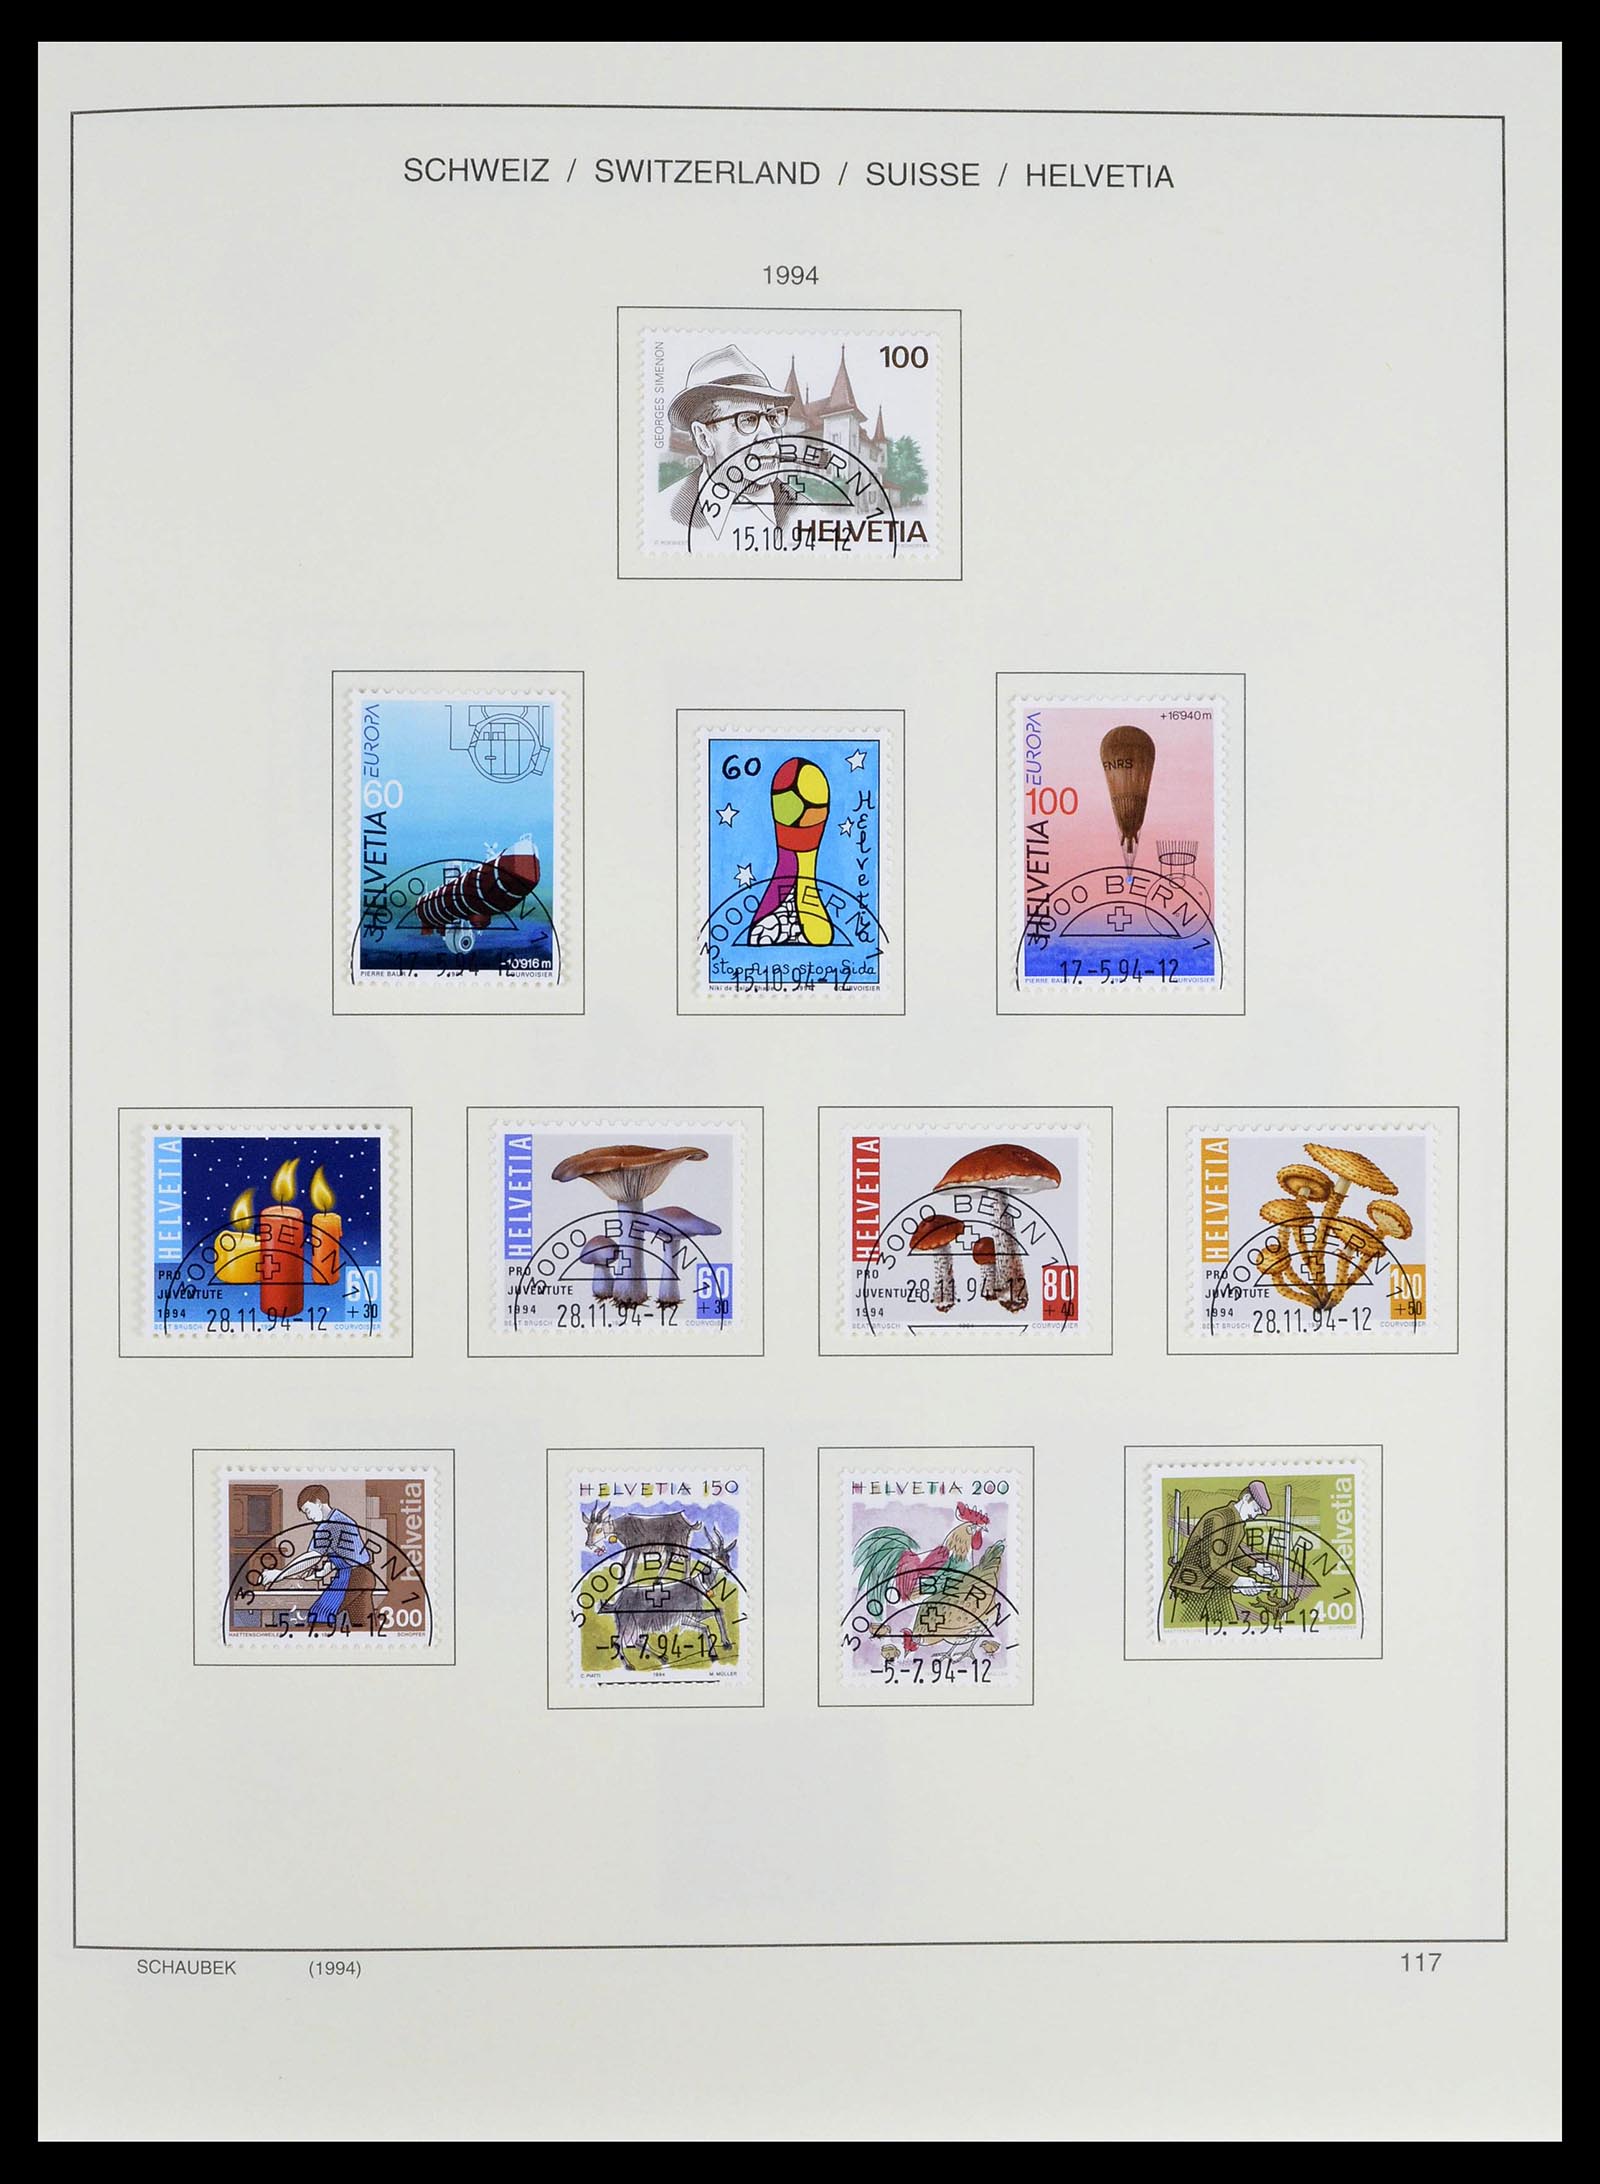 39322 0040 - Stamp collection 39322 Switzerland 1980-2011.